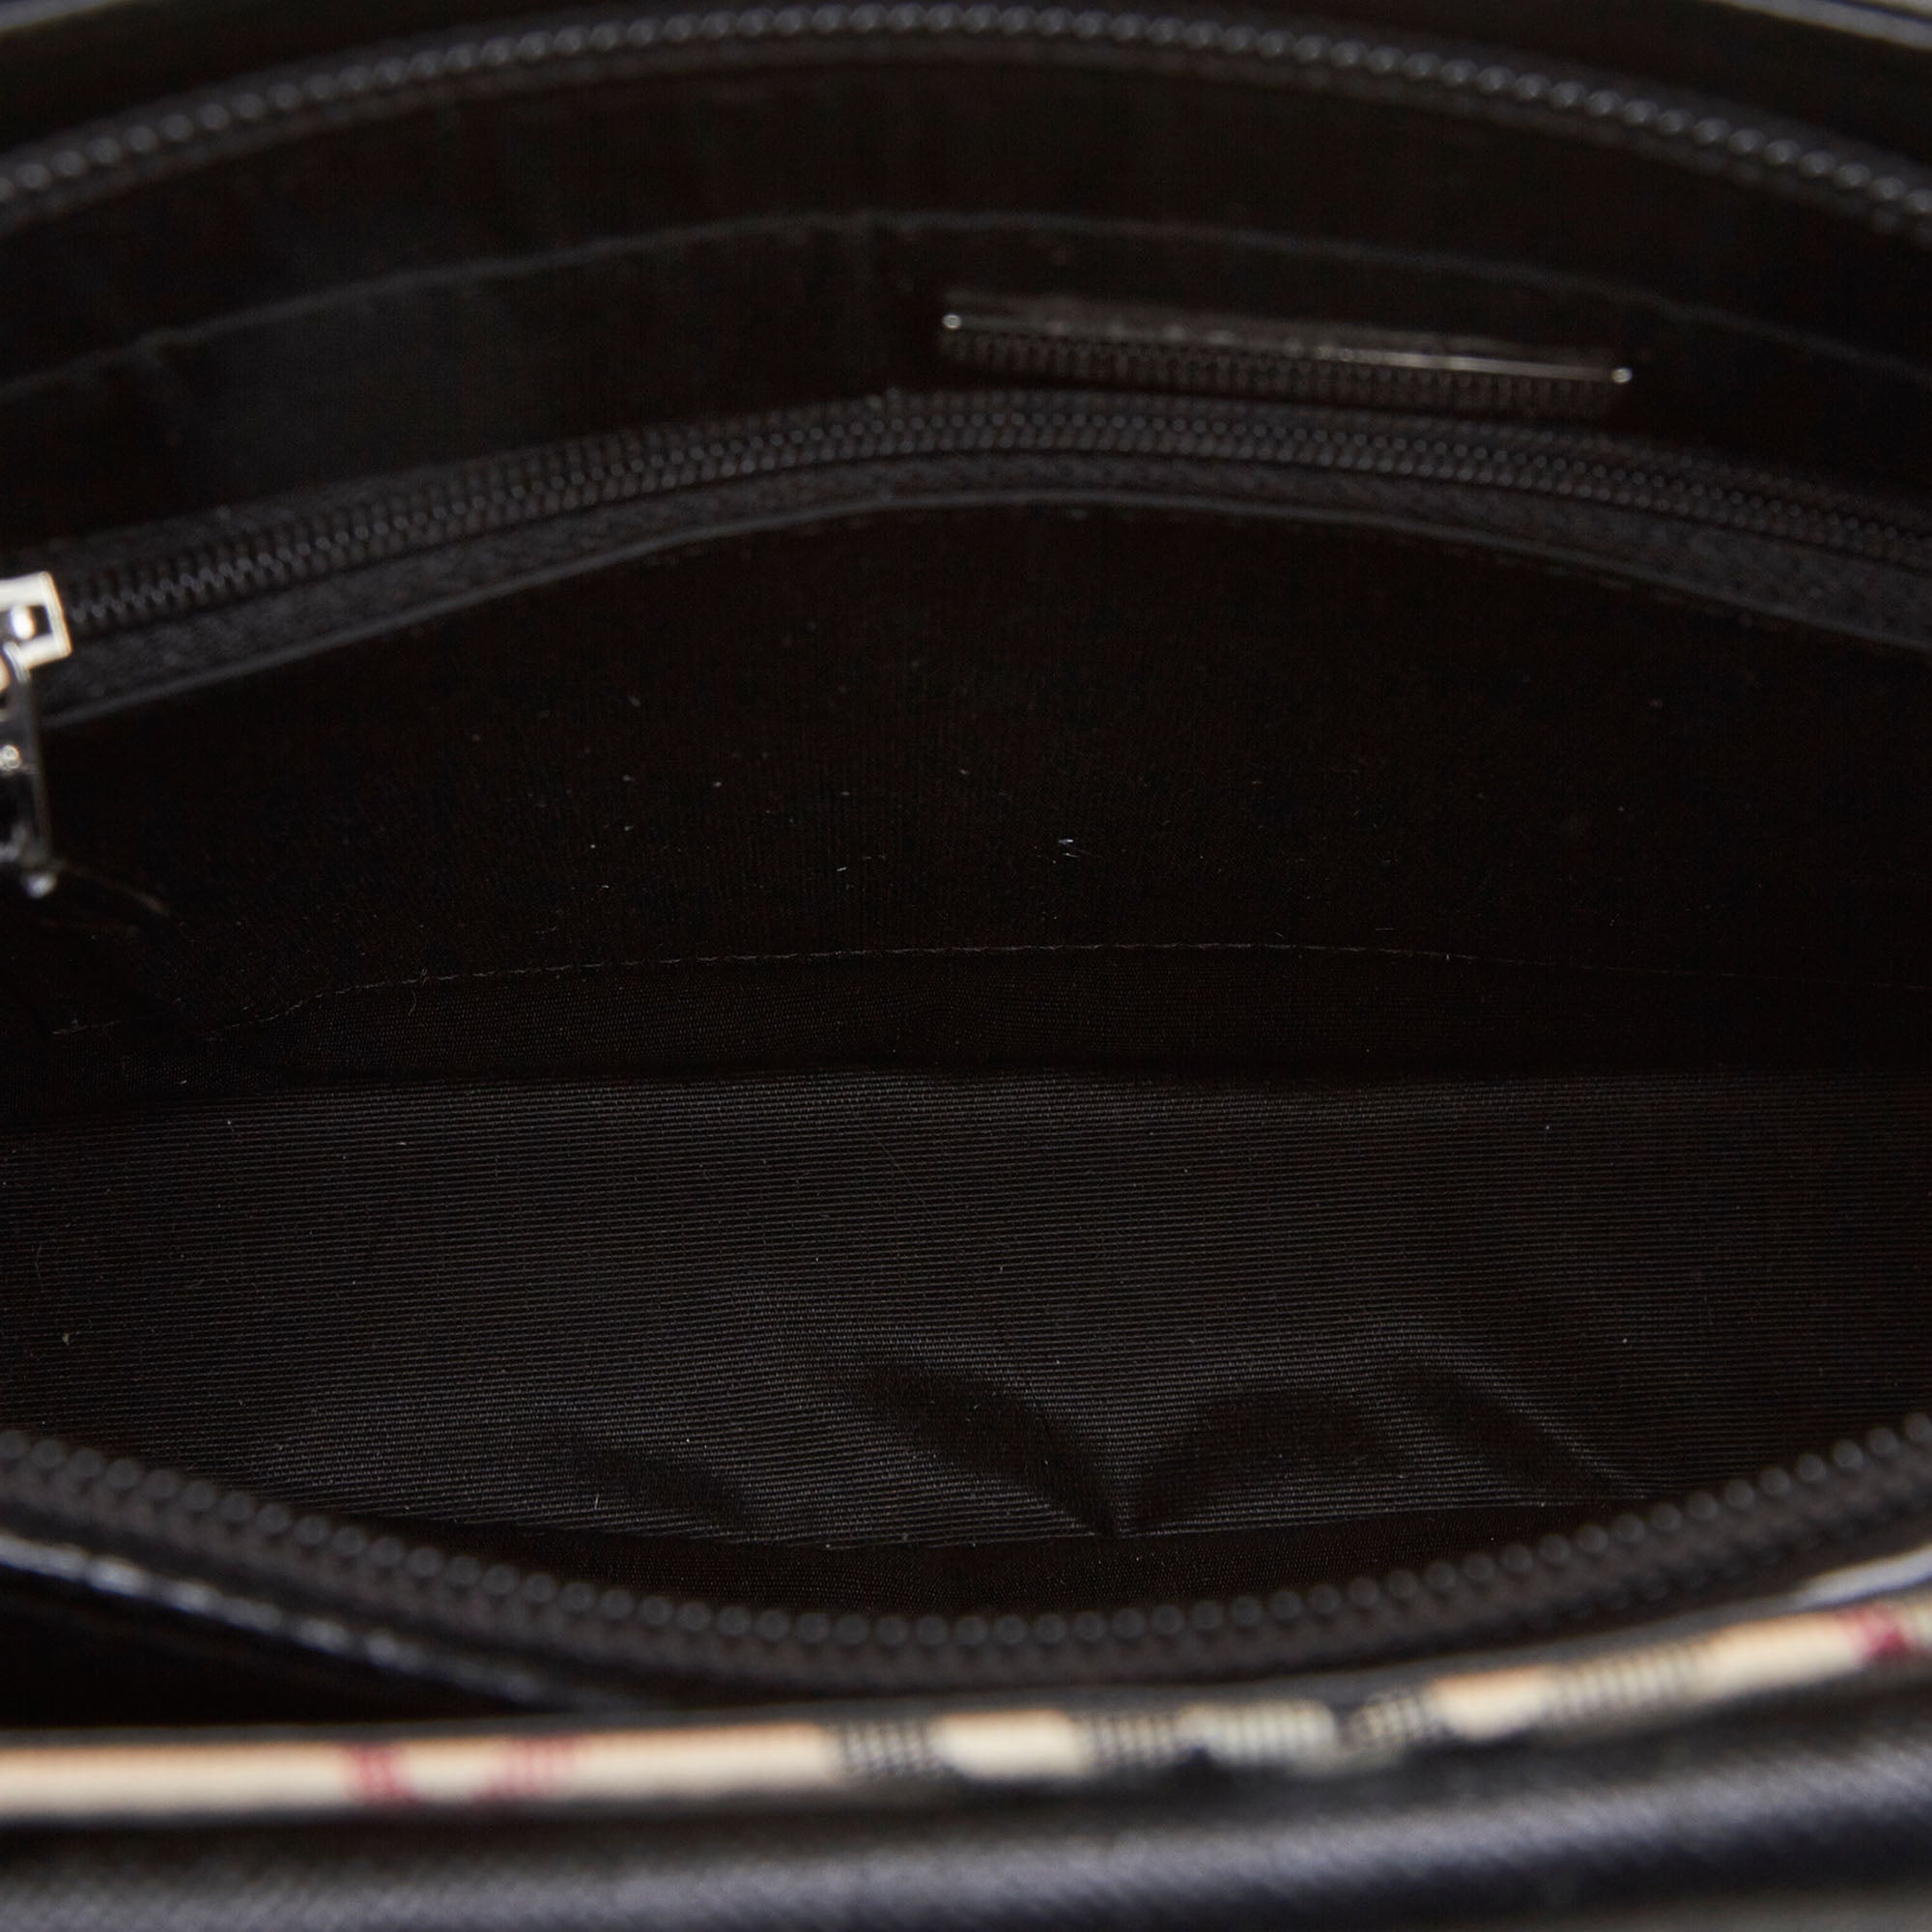 Buy & Consign Authentic Burberry Nova Check Canvas Shoulder Bag at The Plush Posh